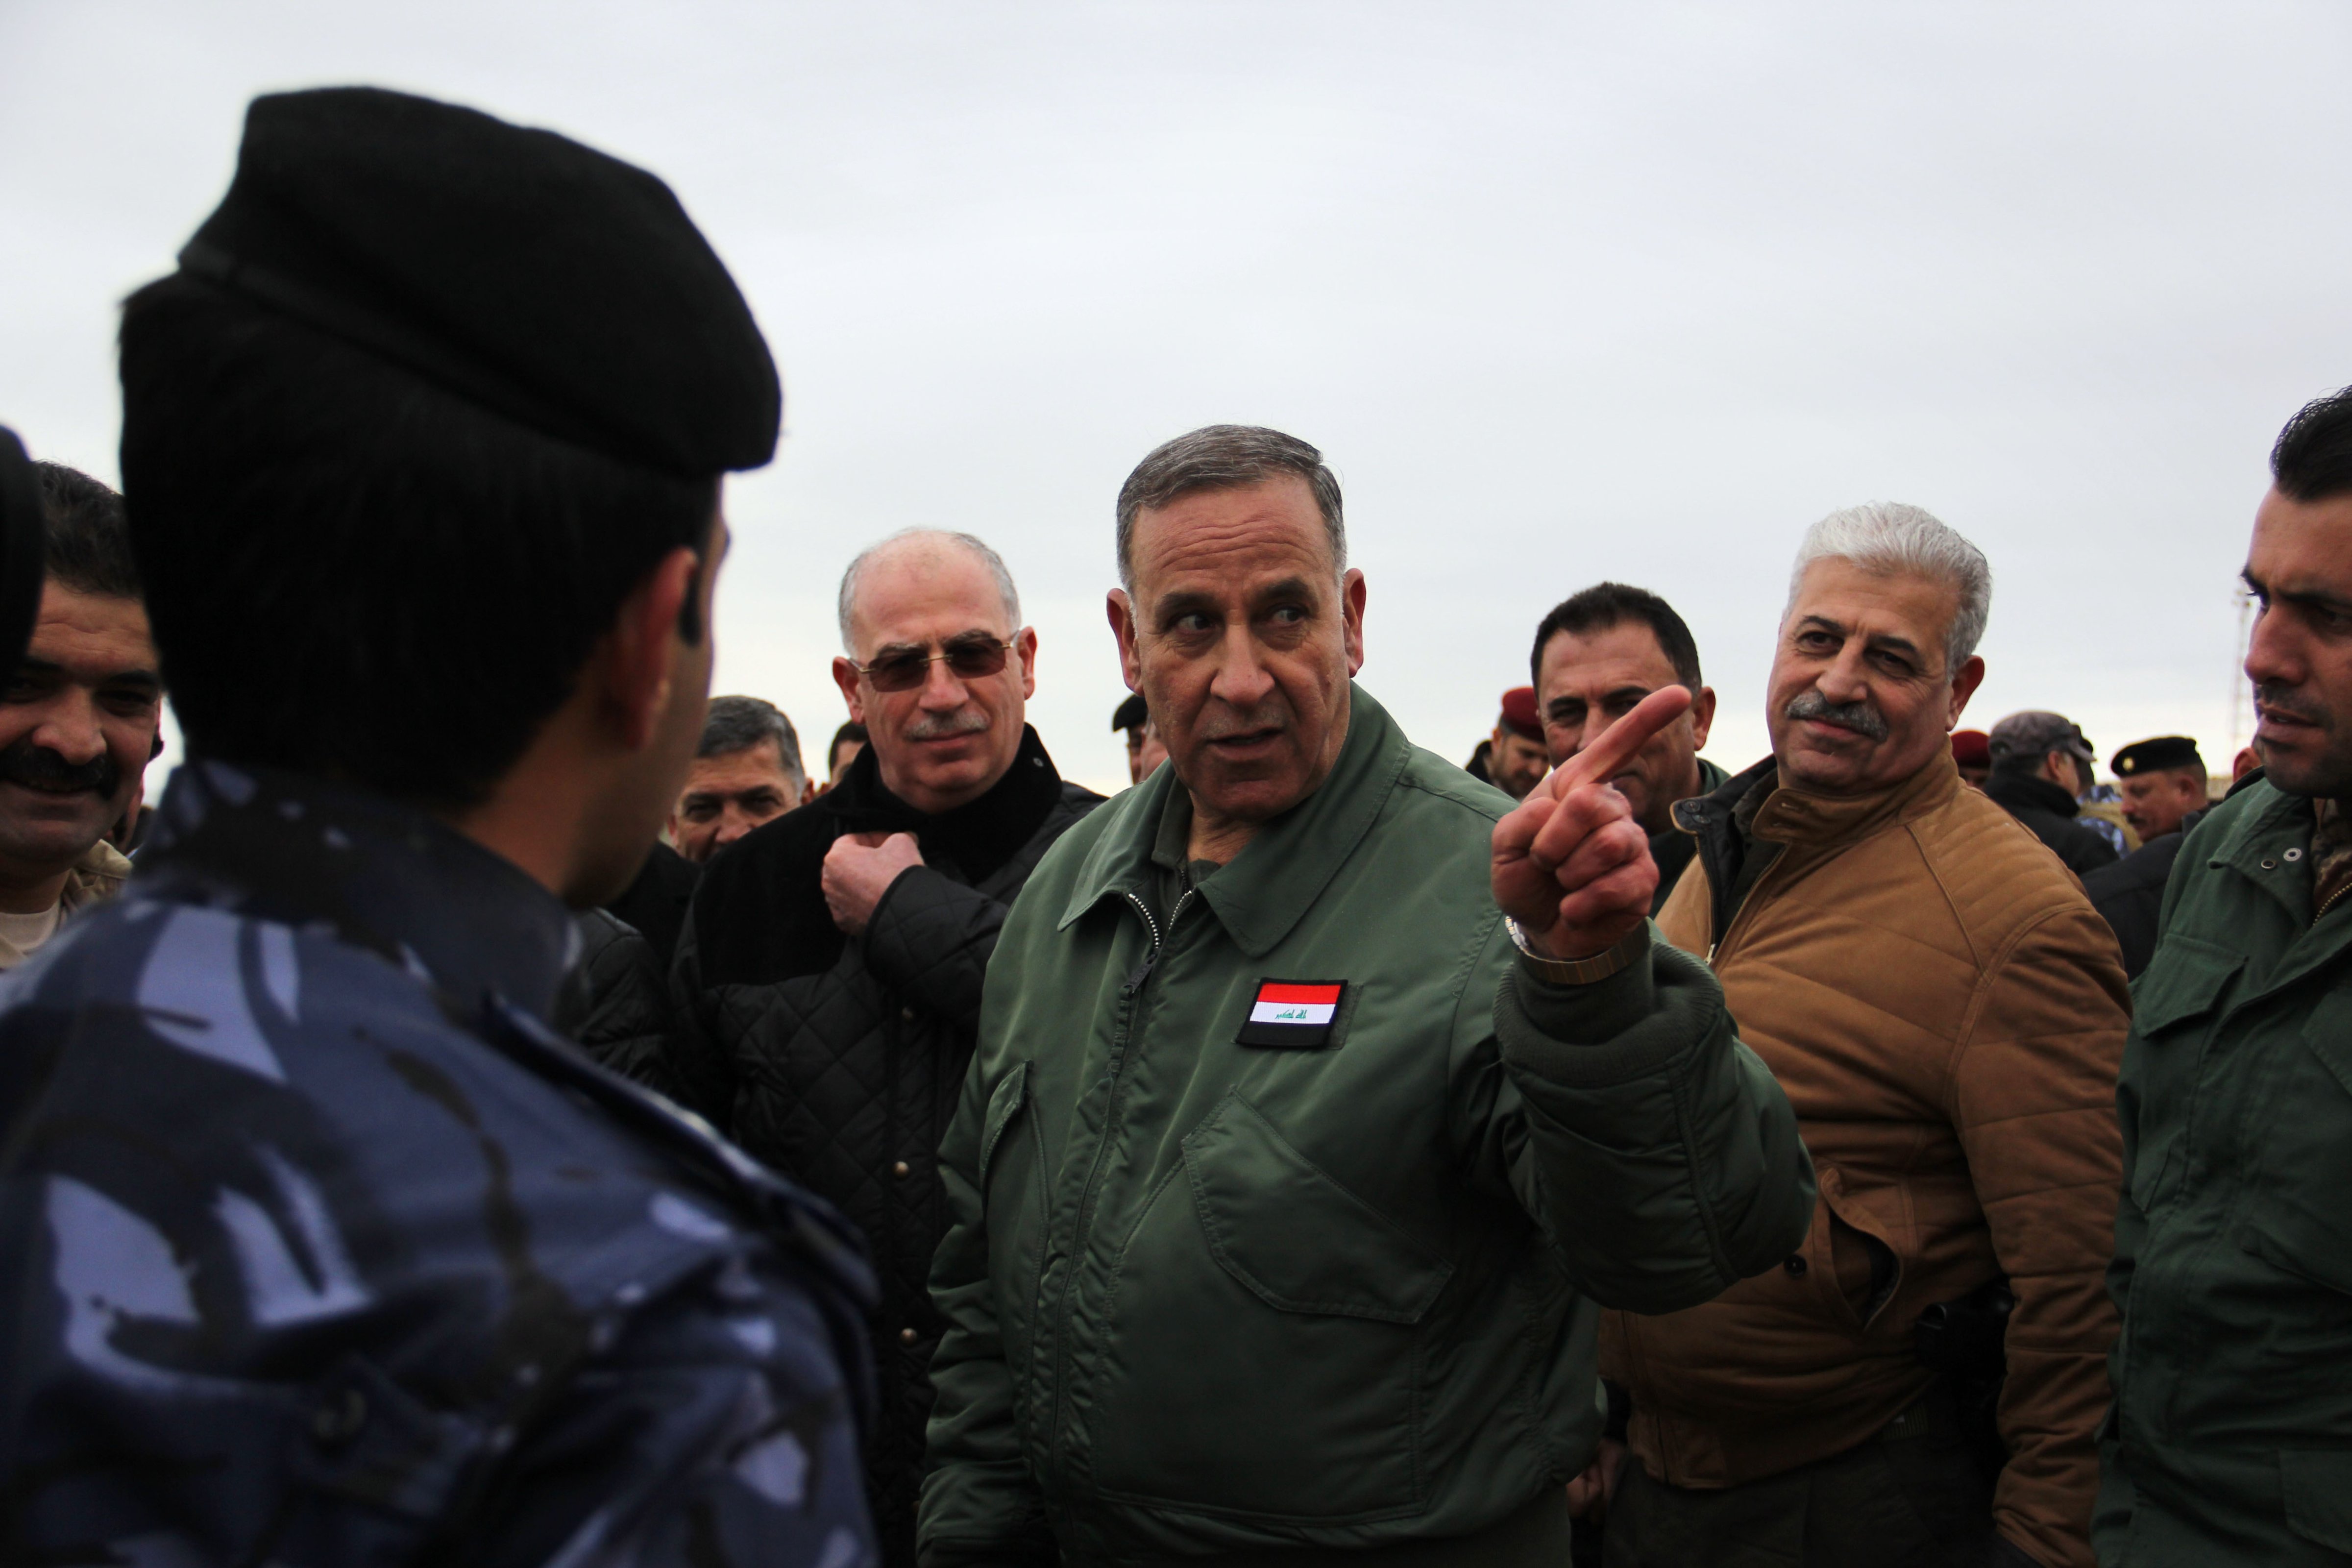 Iraqi national Defense Minister Khaled al-Obeidi visits the Mosul Liberation Camp in Dubardan, Iraq. (Rebecca Collard)